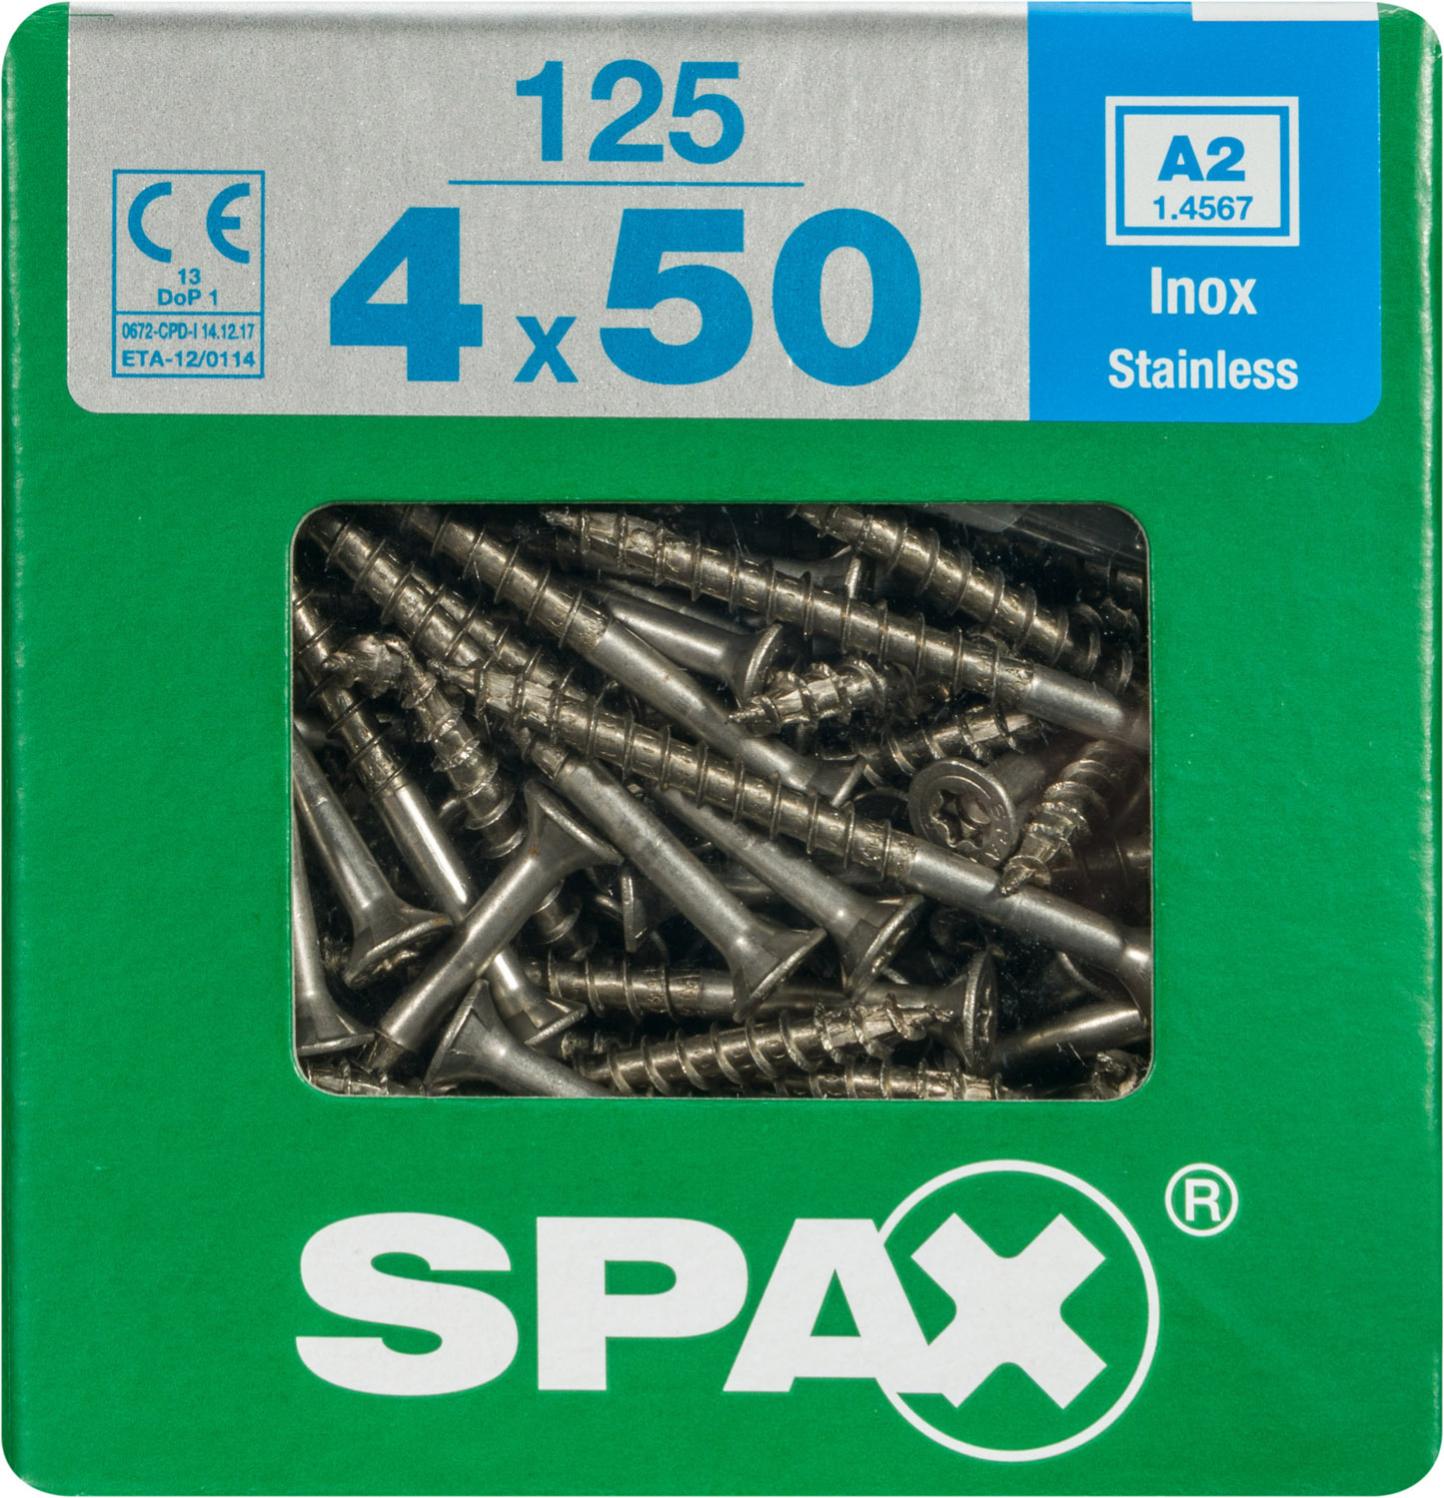 Spax Cond.200 Vis tete fraisee crantee type torx ou etoile pour terrasse-inox a2 Ø mm.5 Long mm.40 